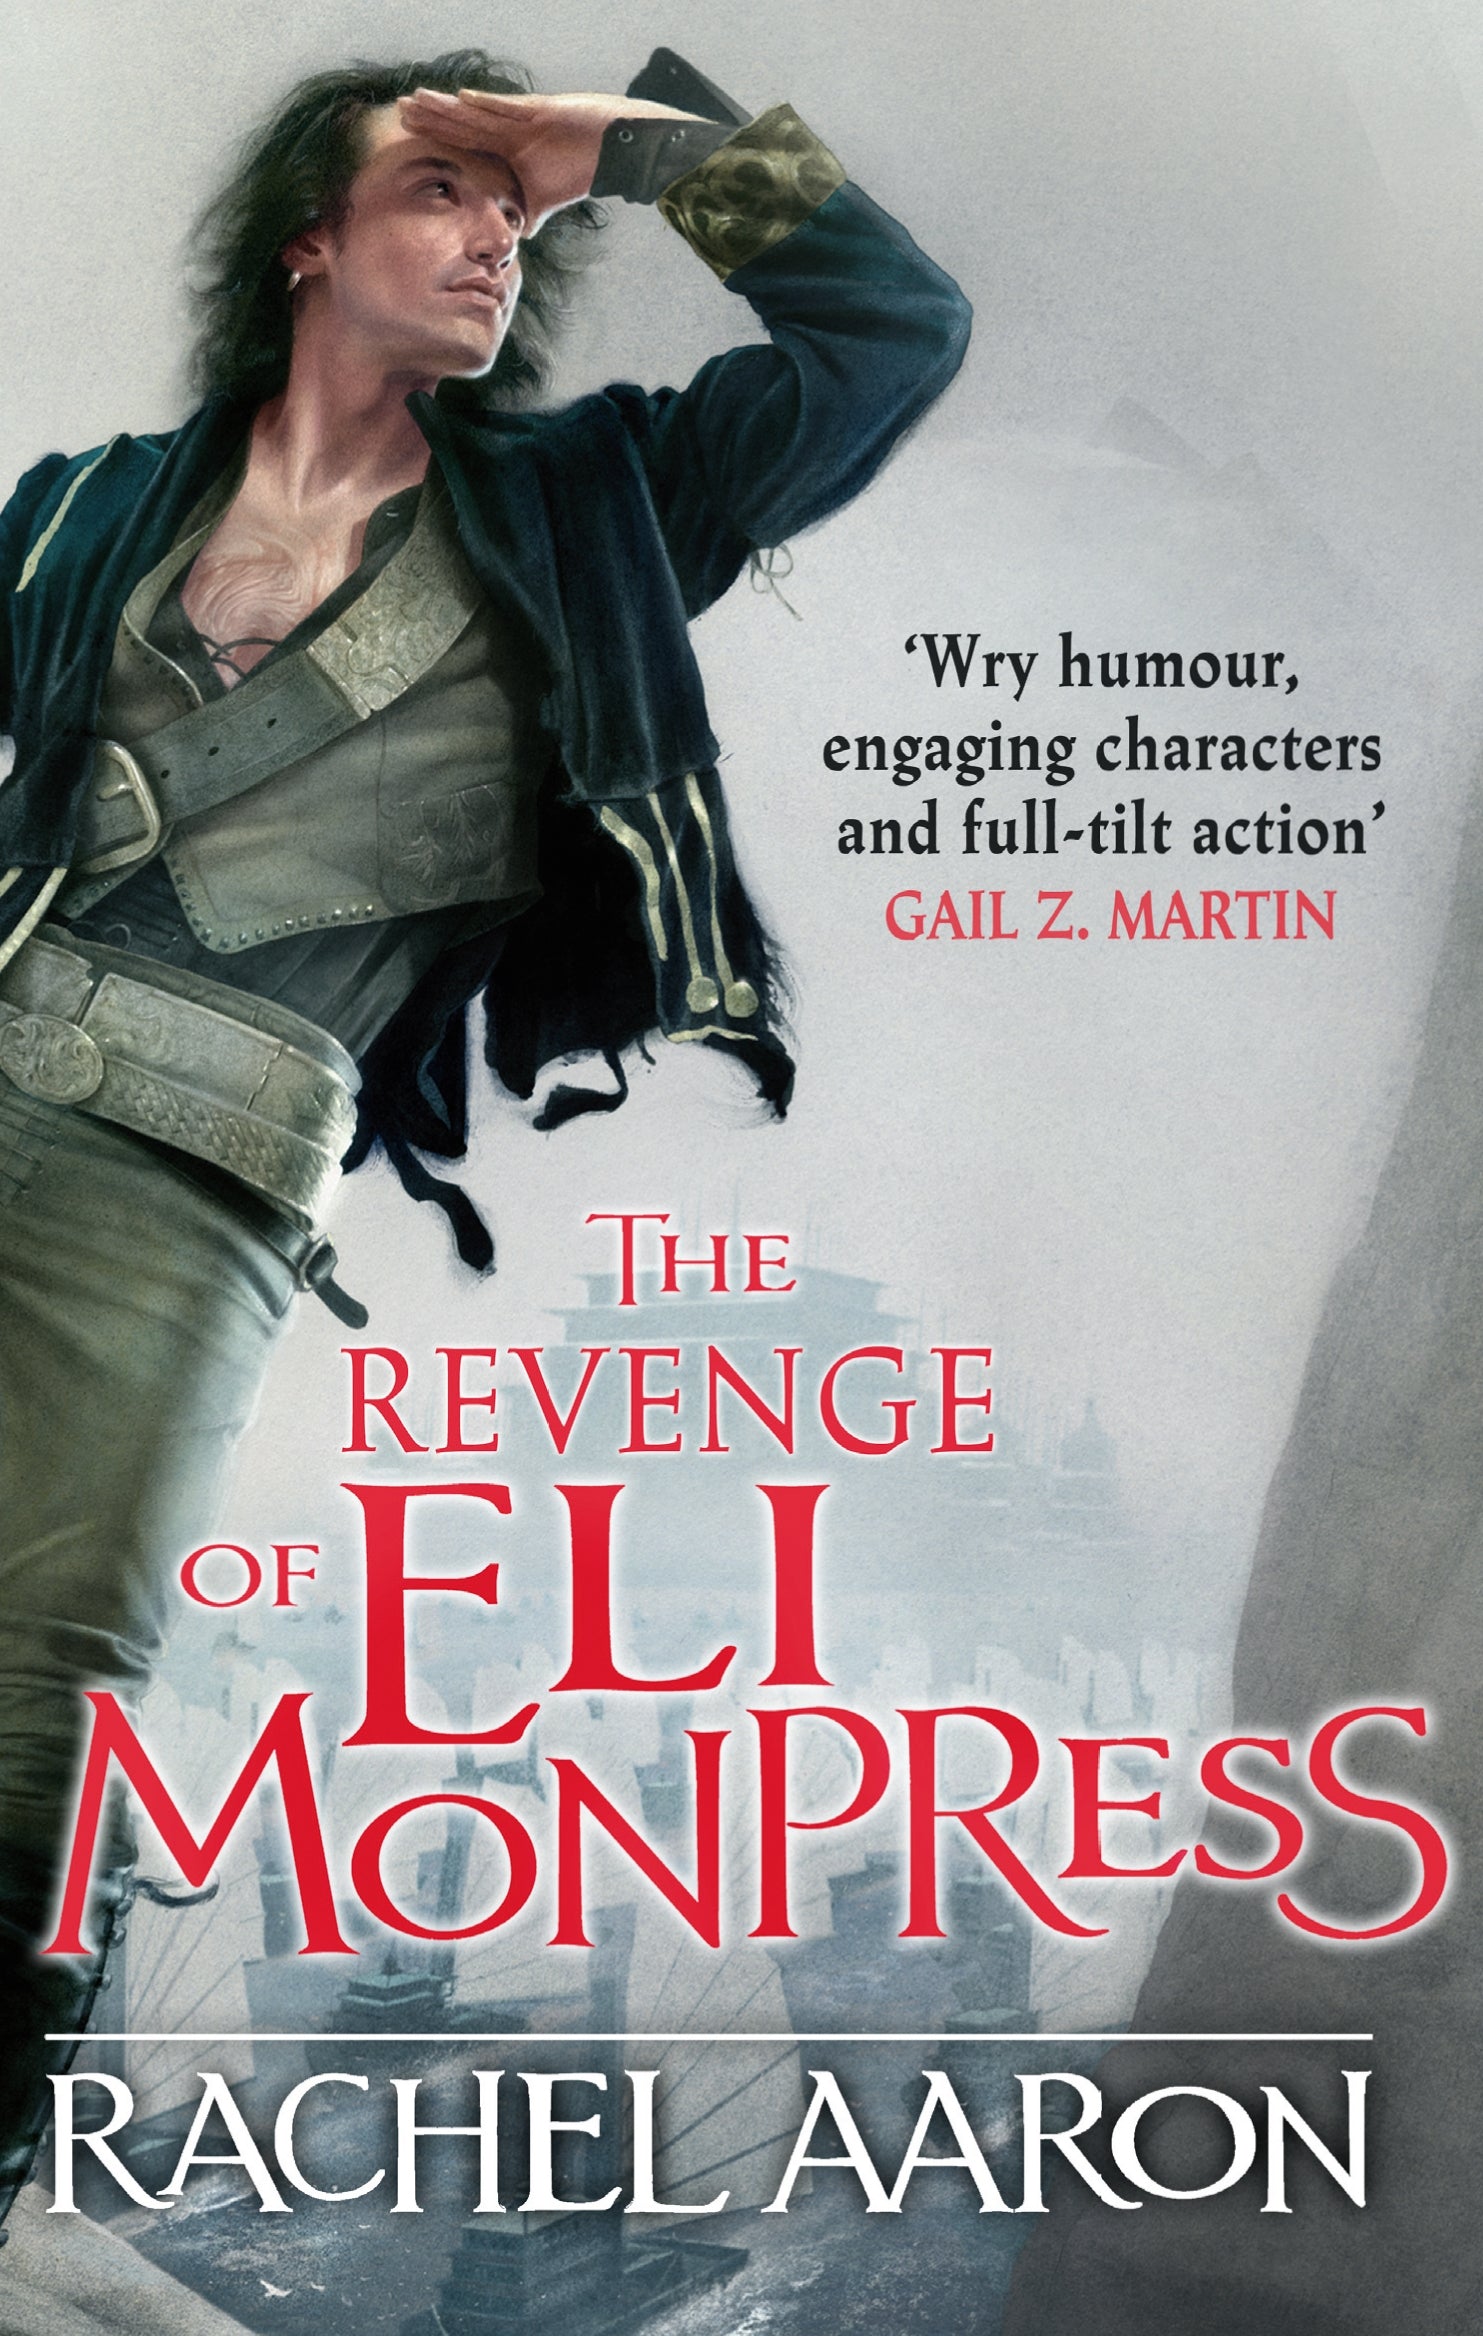 The Revenge of Eli Monpress by Rachel Aaron